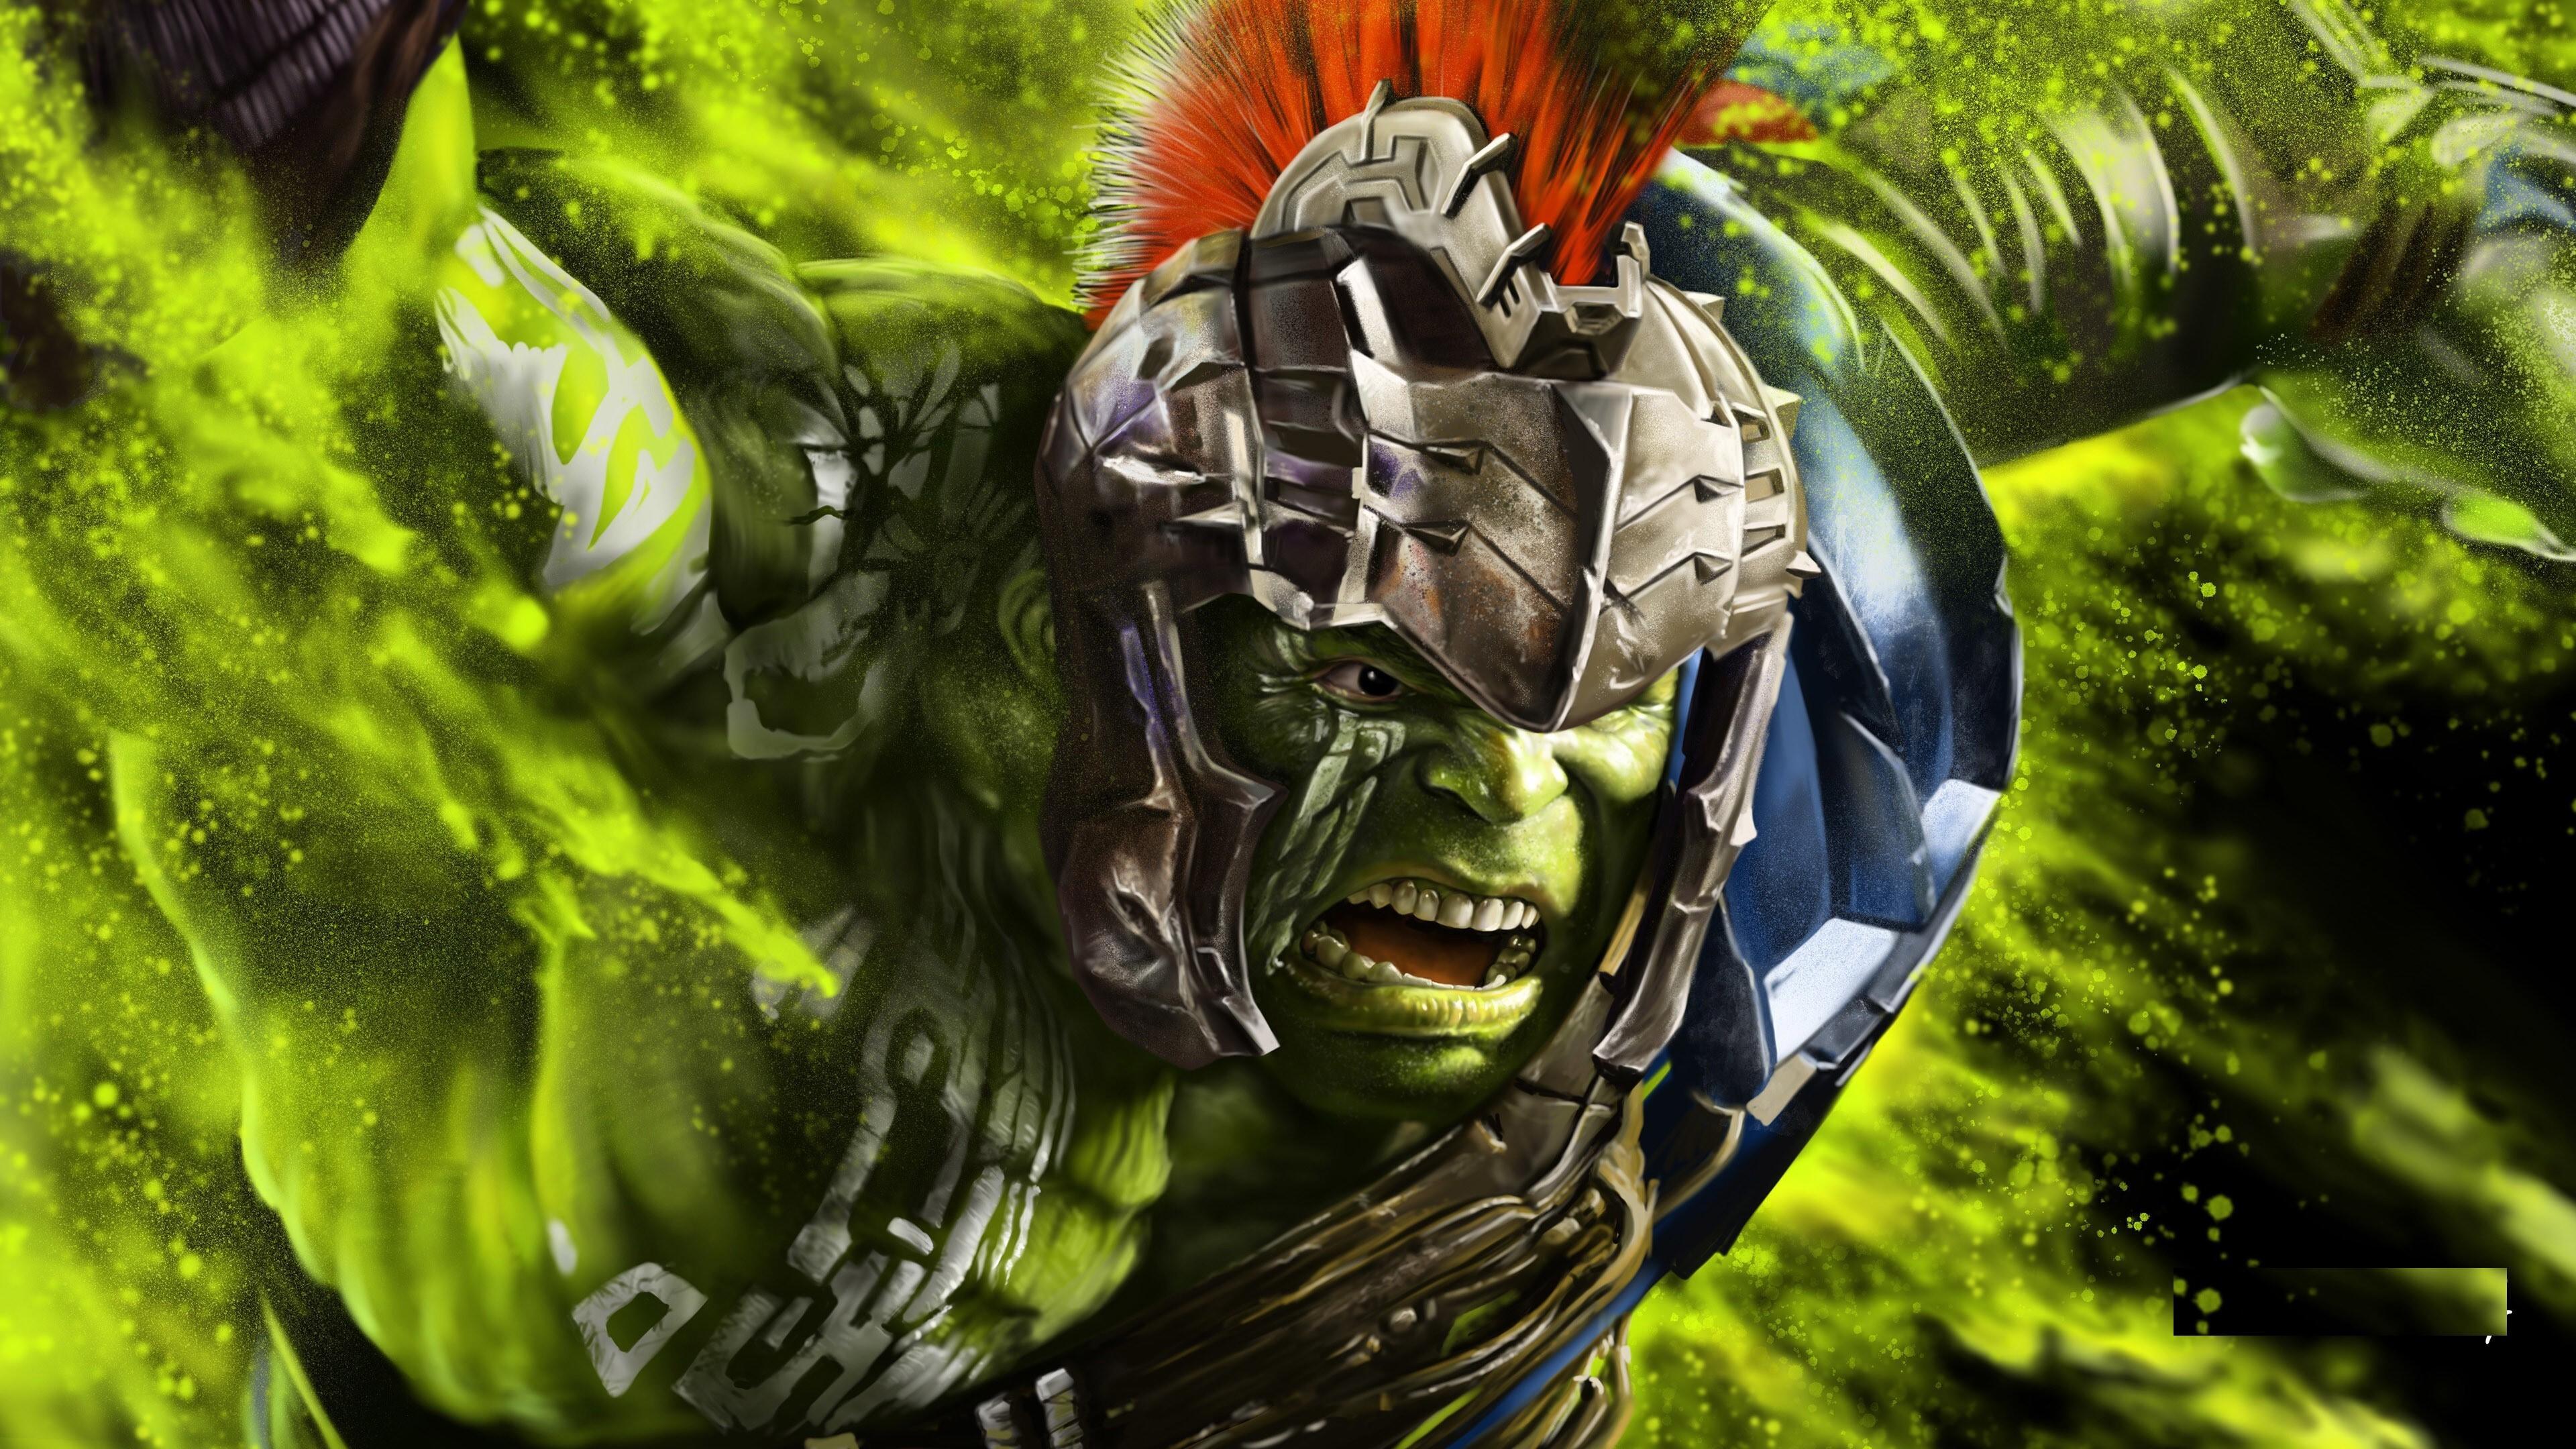 3840 x 2160 · jpeg - Superhero Hulk 4K Photo | HD Wallpapers